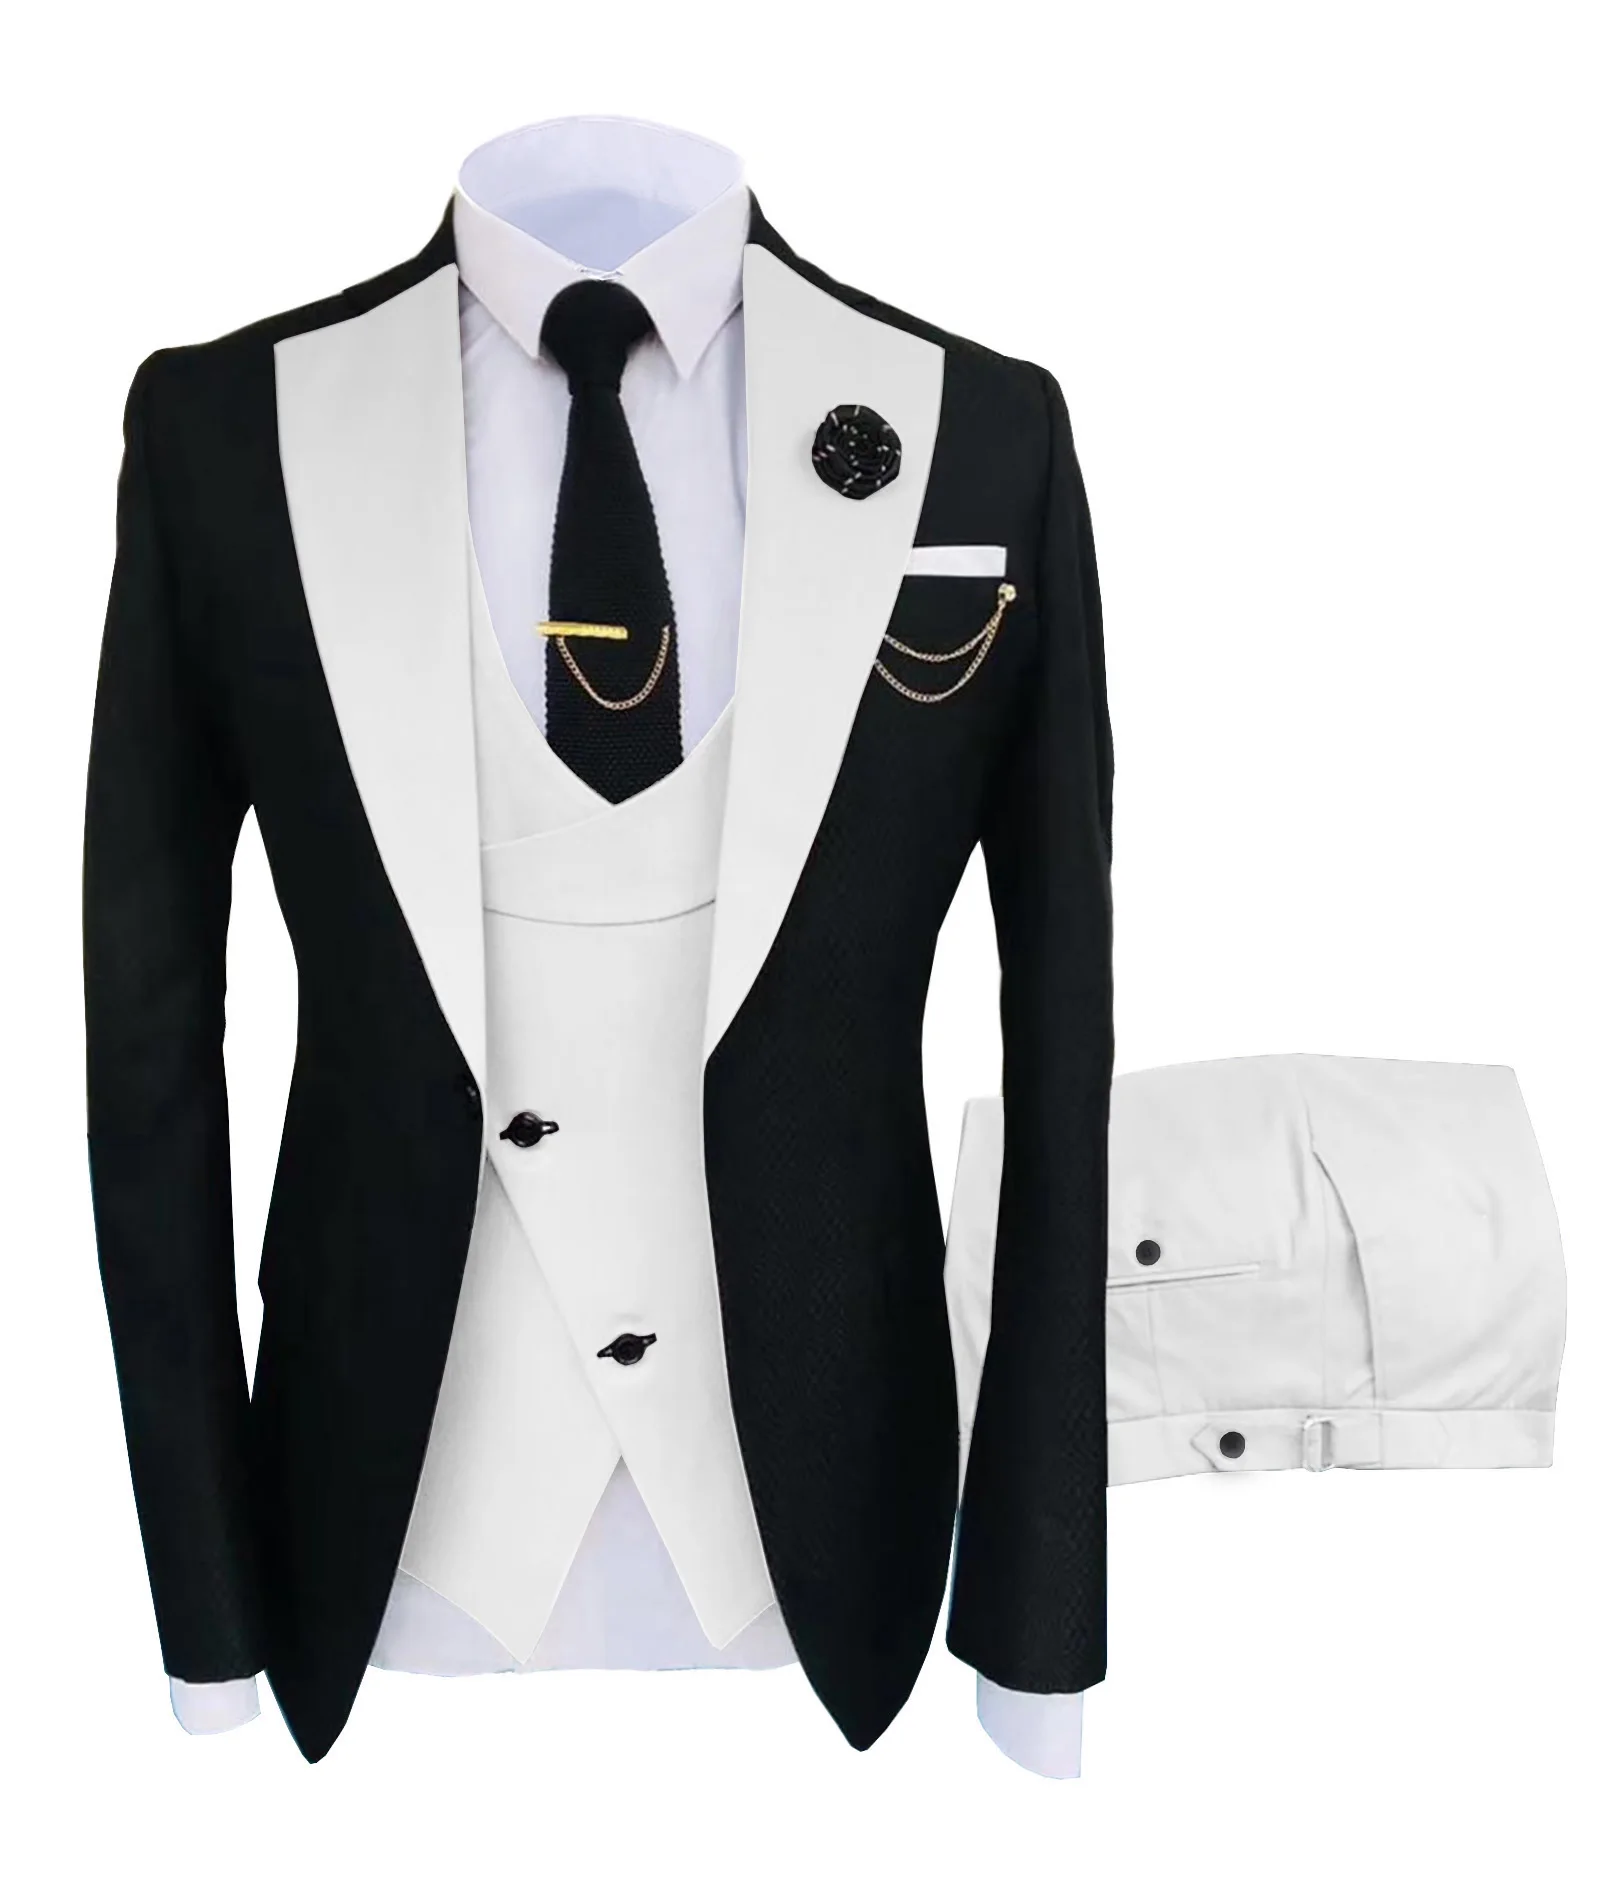 Tanio Nowy kostium Homme popularne ubrania luksusowe Party Stage garnitur sklep